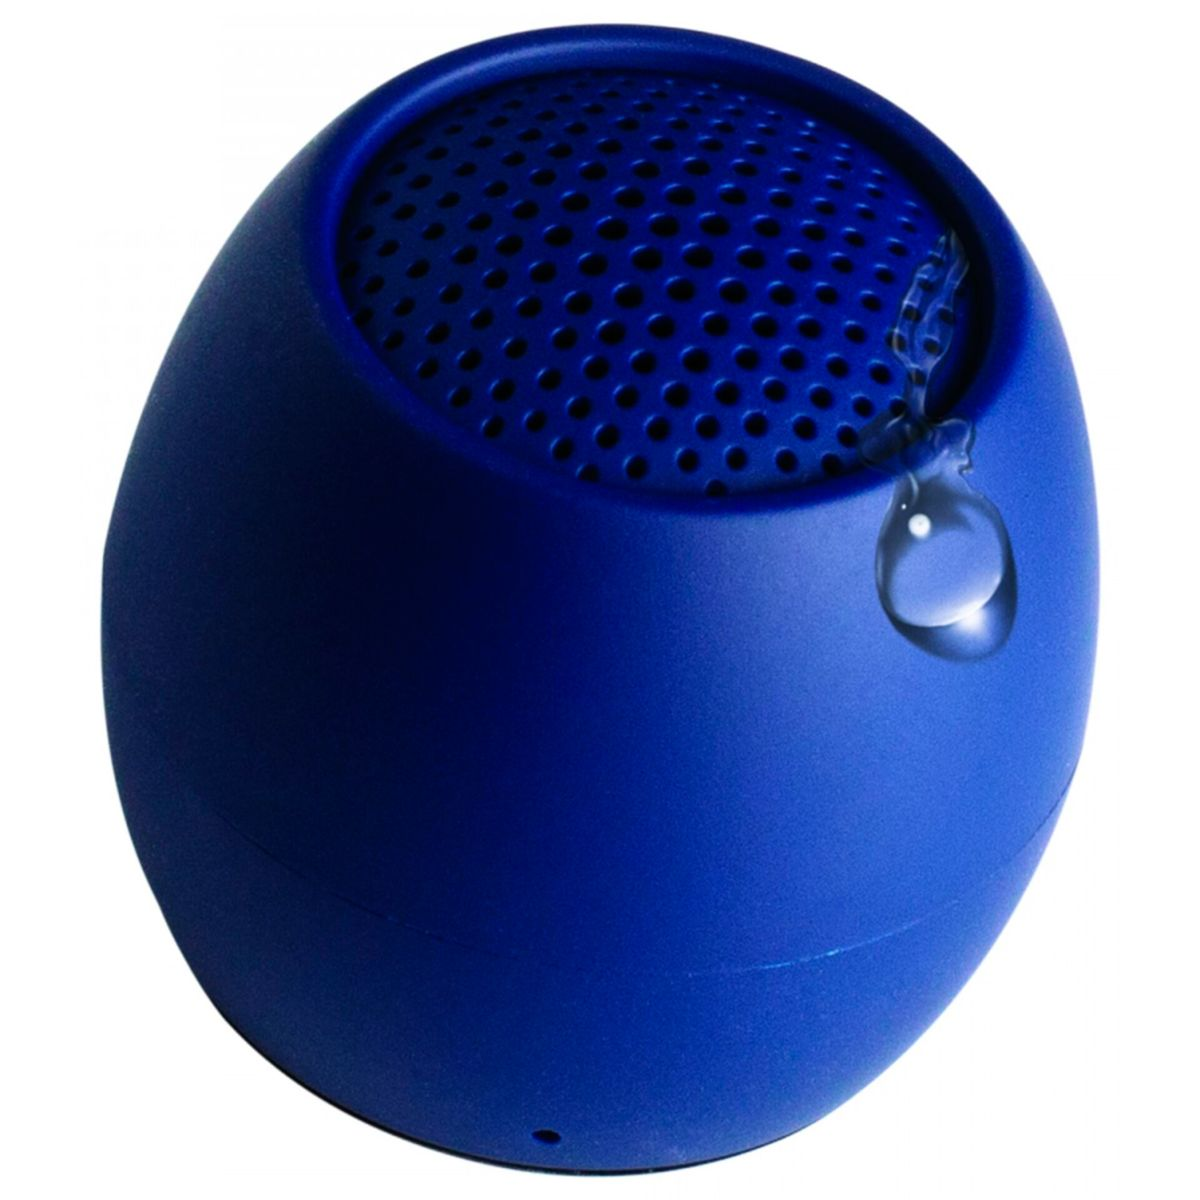 Bluetooth-Lautsprecher, BOOMPODS Zero blau Navy Blue